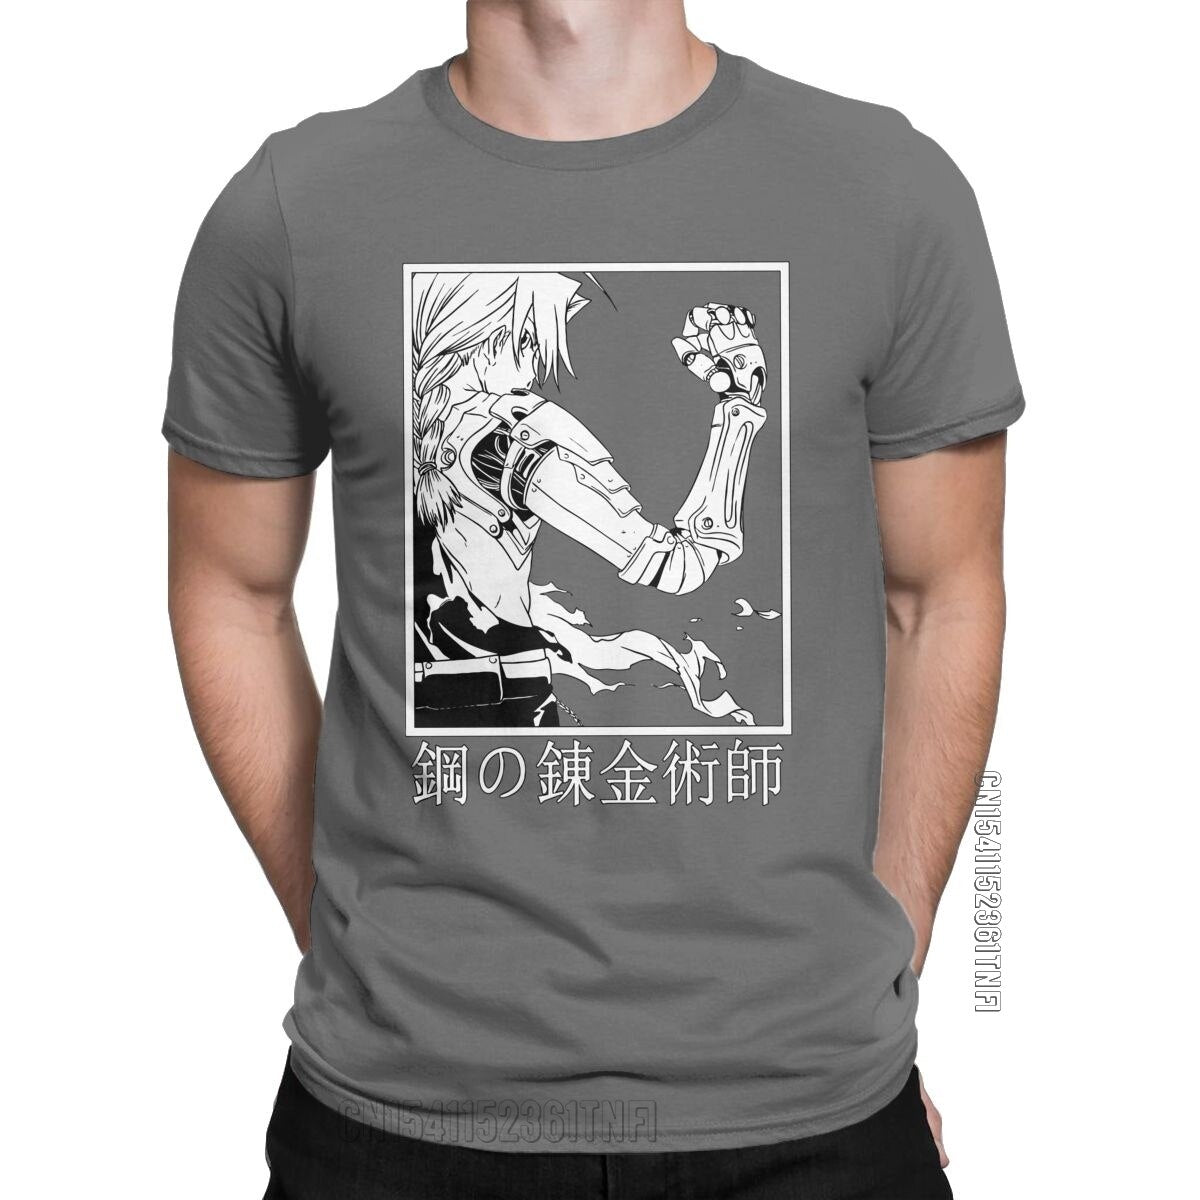 Fullmetal Alchemist T-Shirt For Men Novelty Pure Cotton Tee Shirt Round Neck Classic Short Sleeve T Shirts Original Tops, everythinganimee